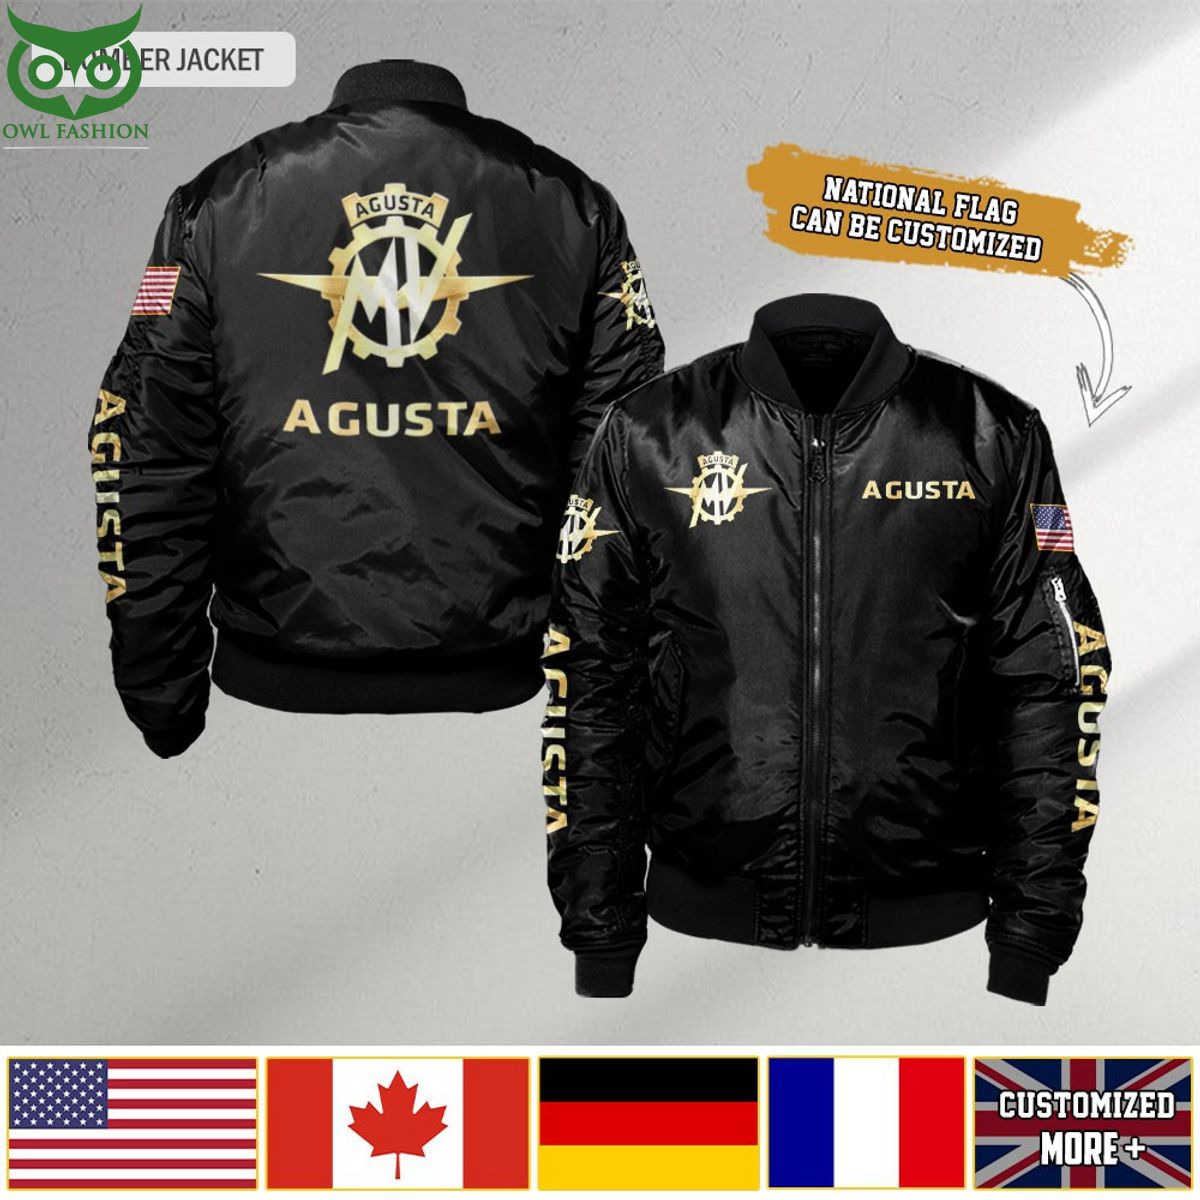 mv agusta custom flag 3d bomber jacket 1 sS8u4.jpg